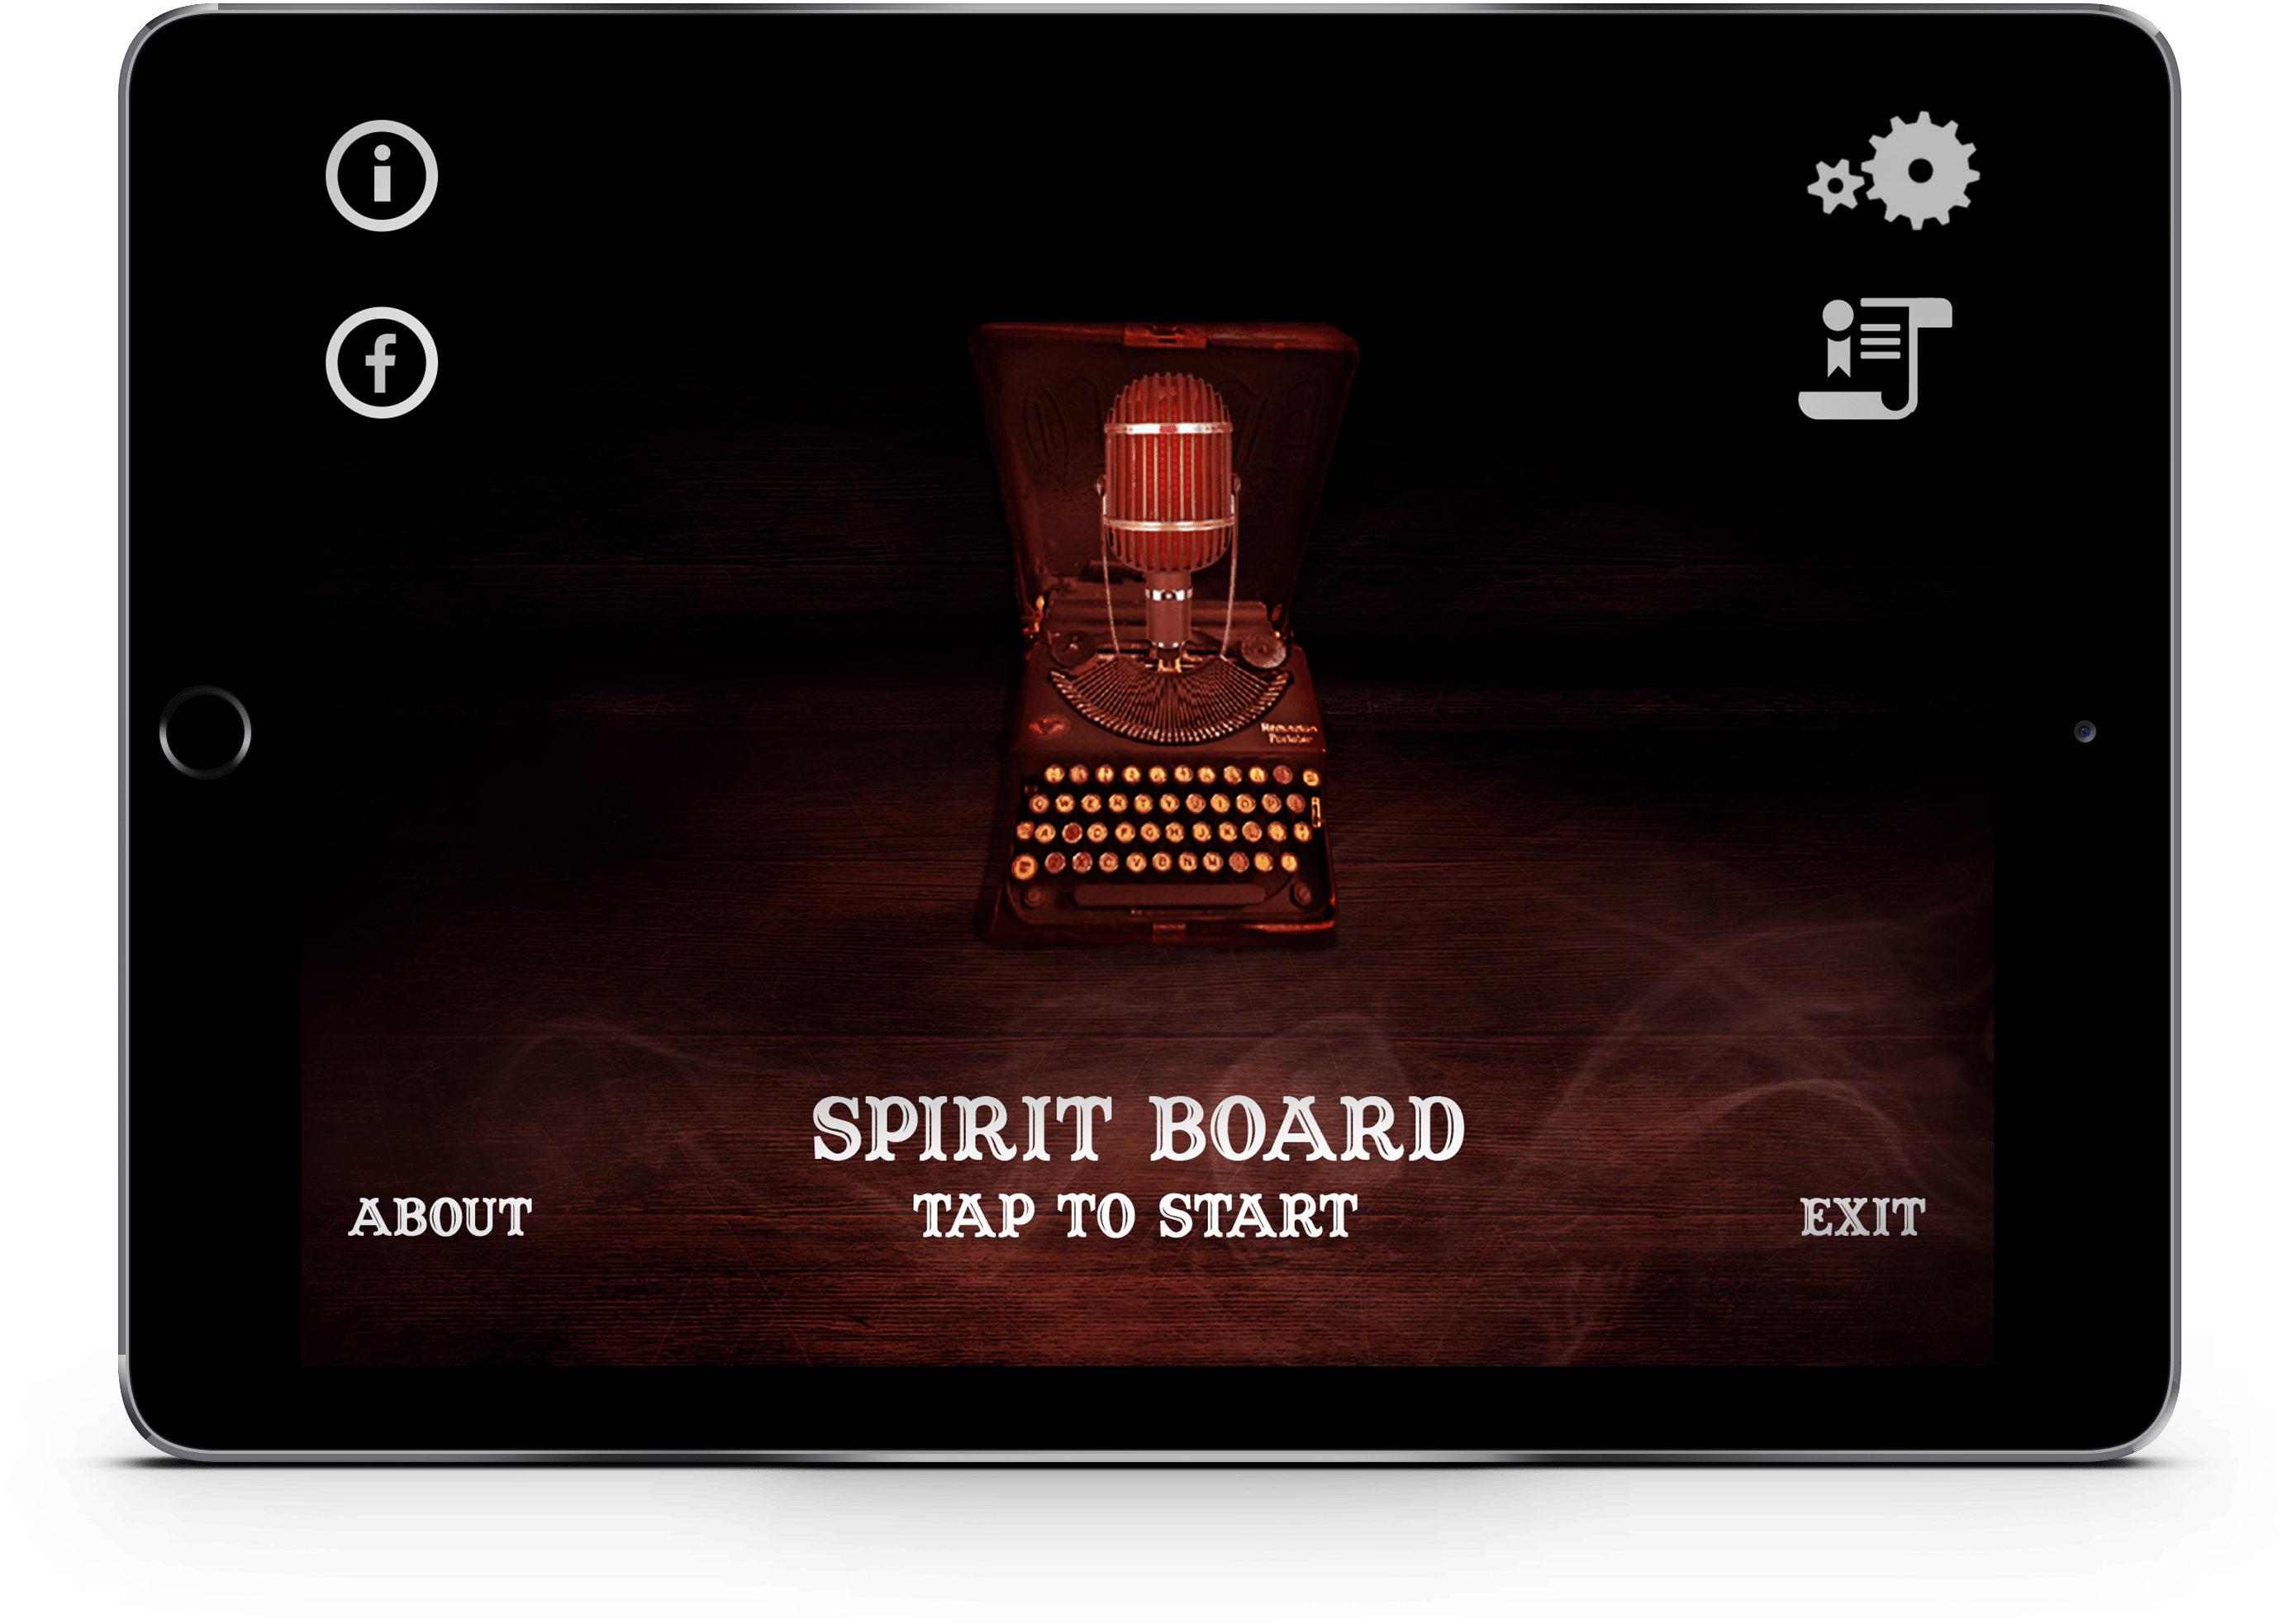 Spirit board app / Software development company Redwerk